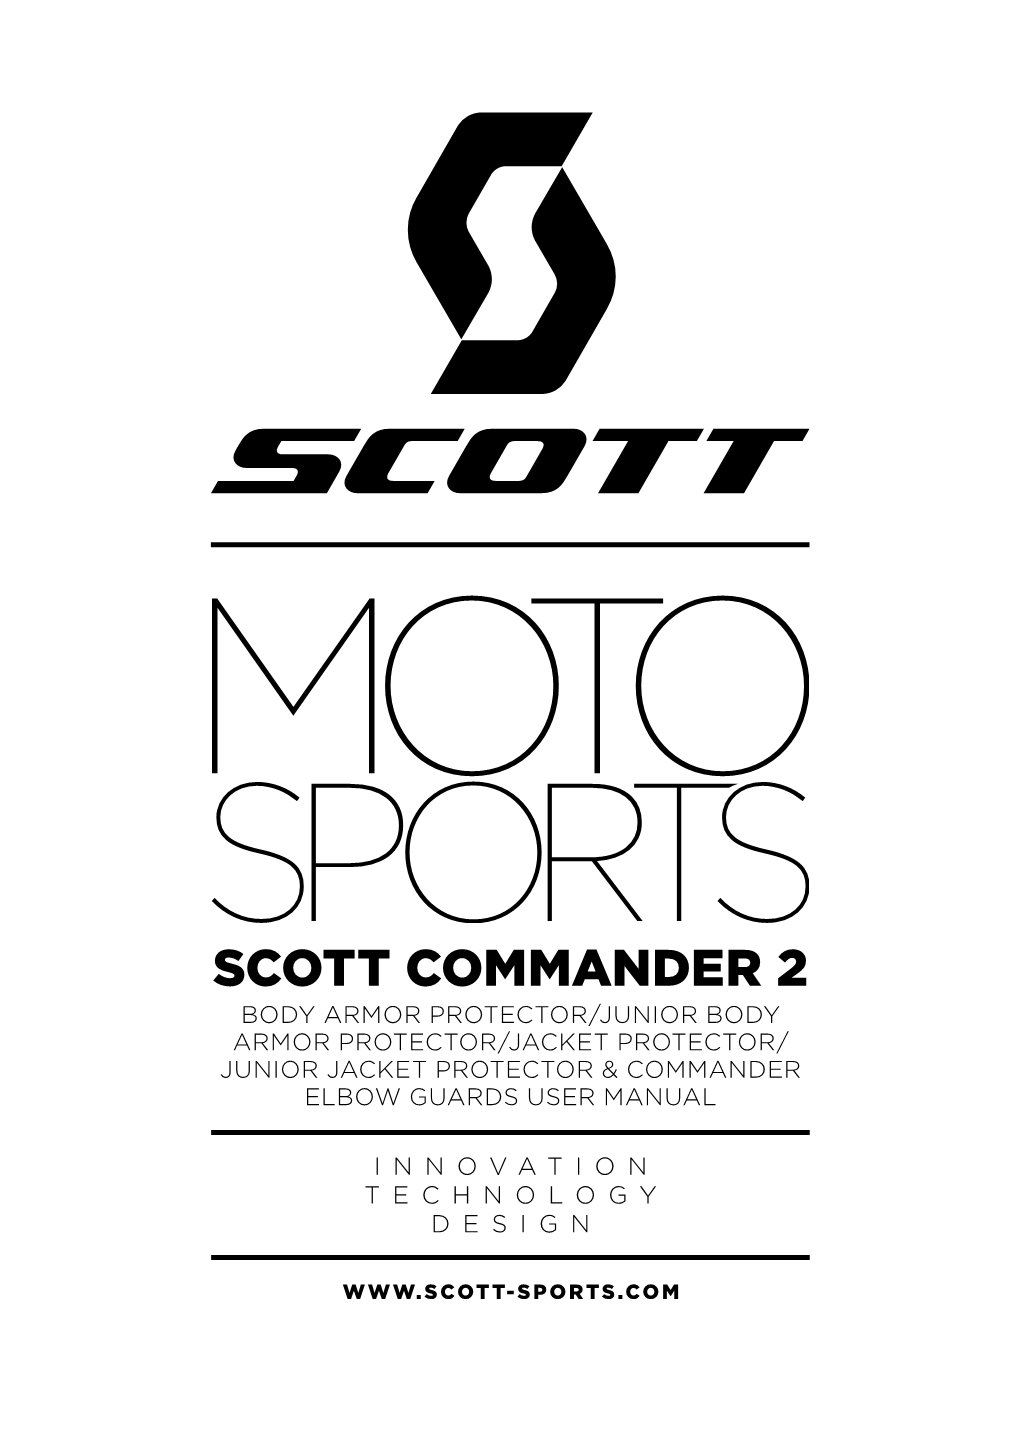 Scott Commander 2 Body Armor Protector/Junior Body Armor Protector/Jacket Protector/ Junior Jacket Protector & Commander Elbow Guards User Manual